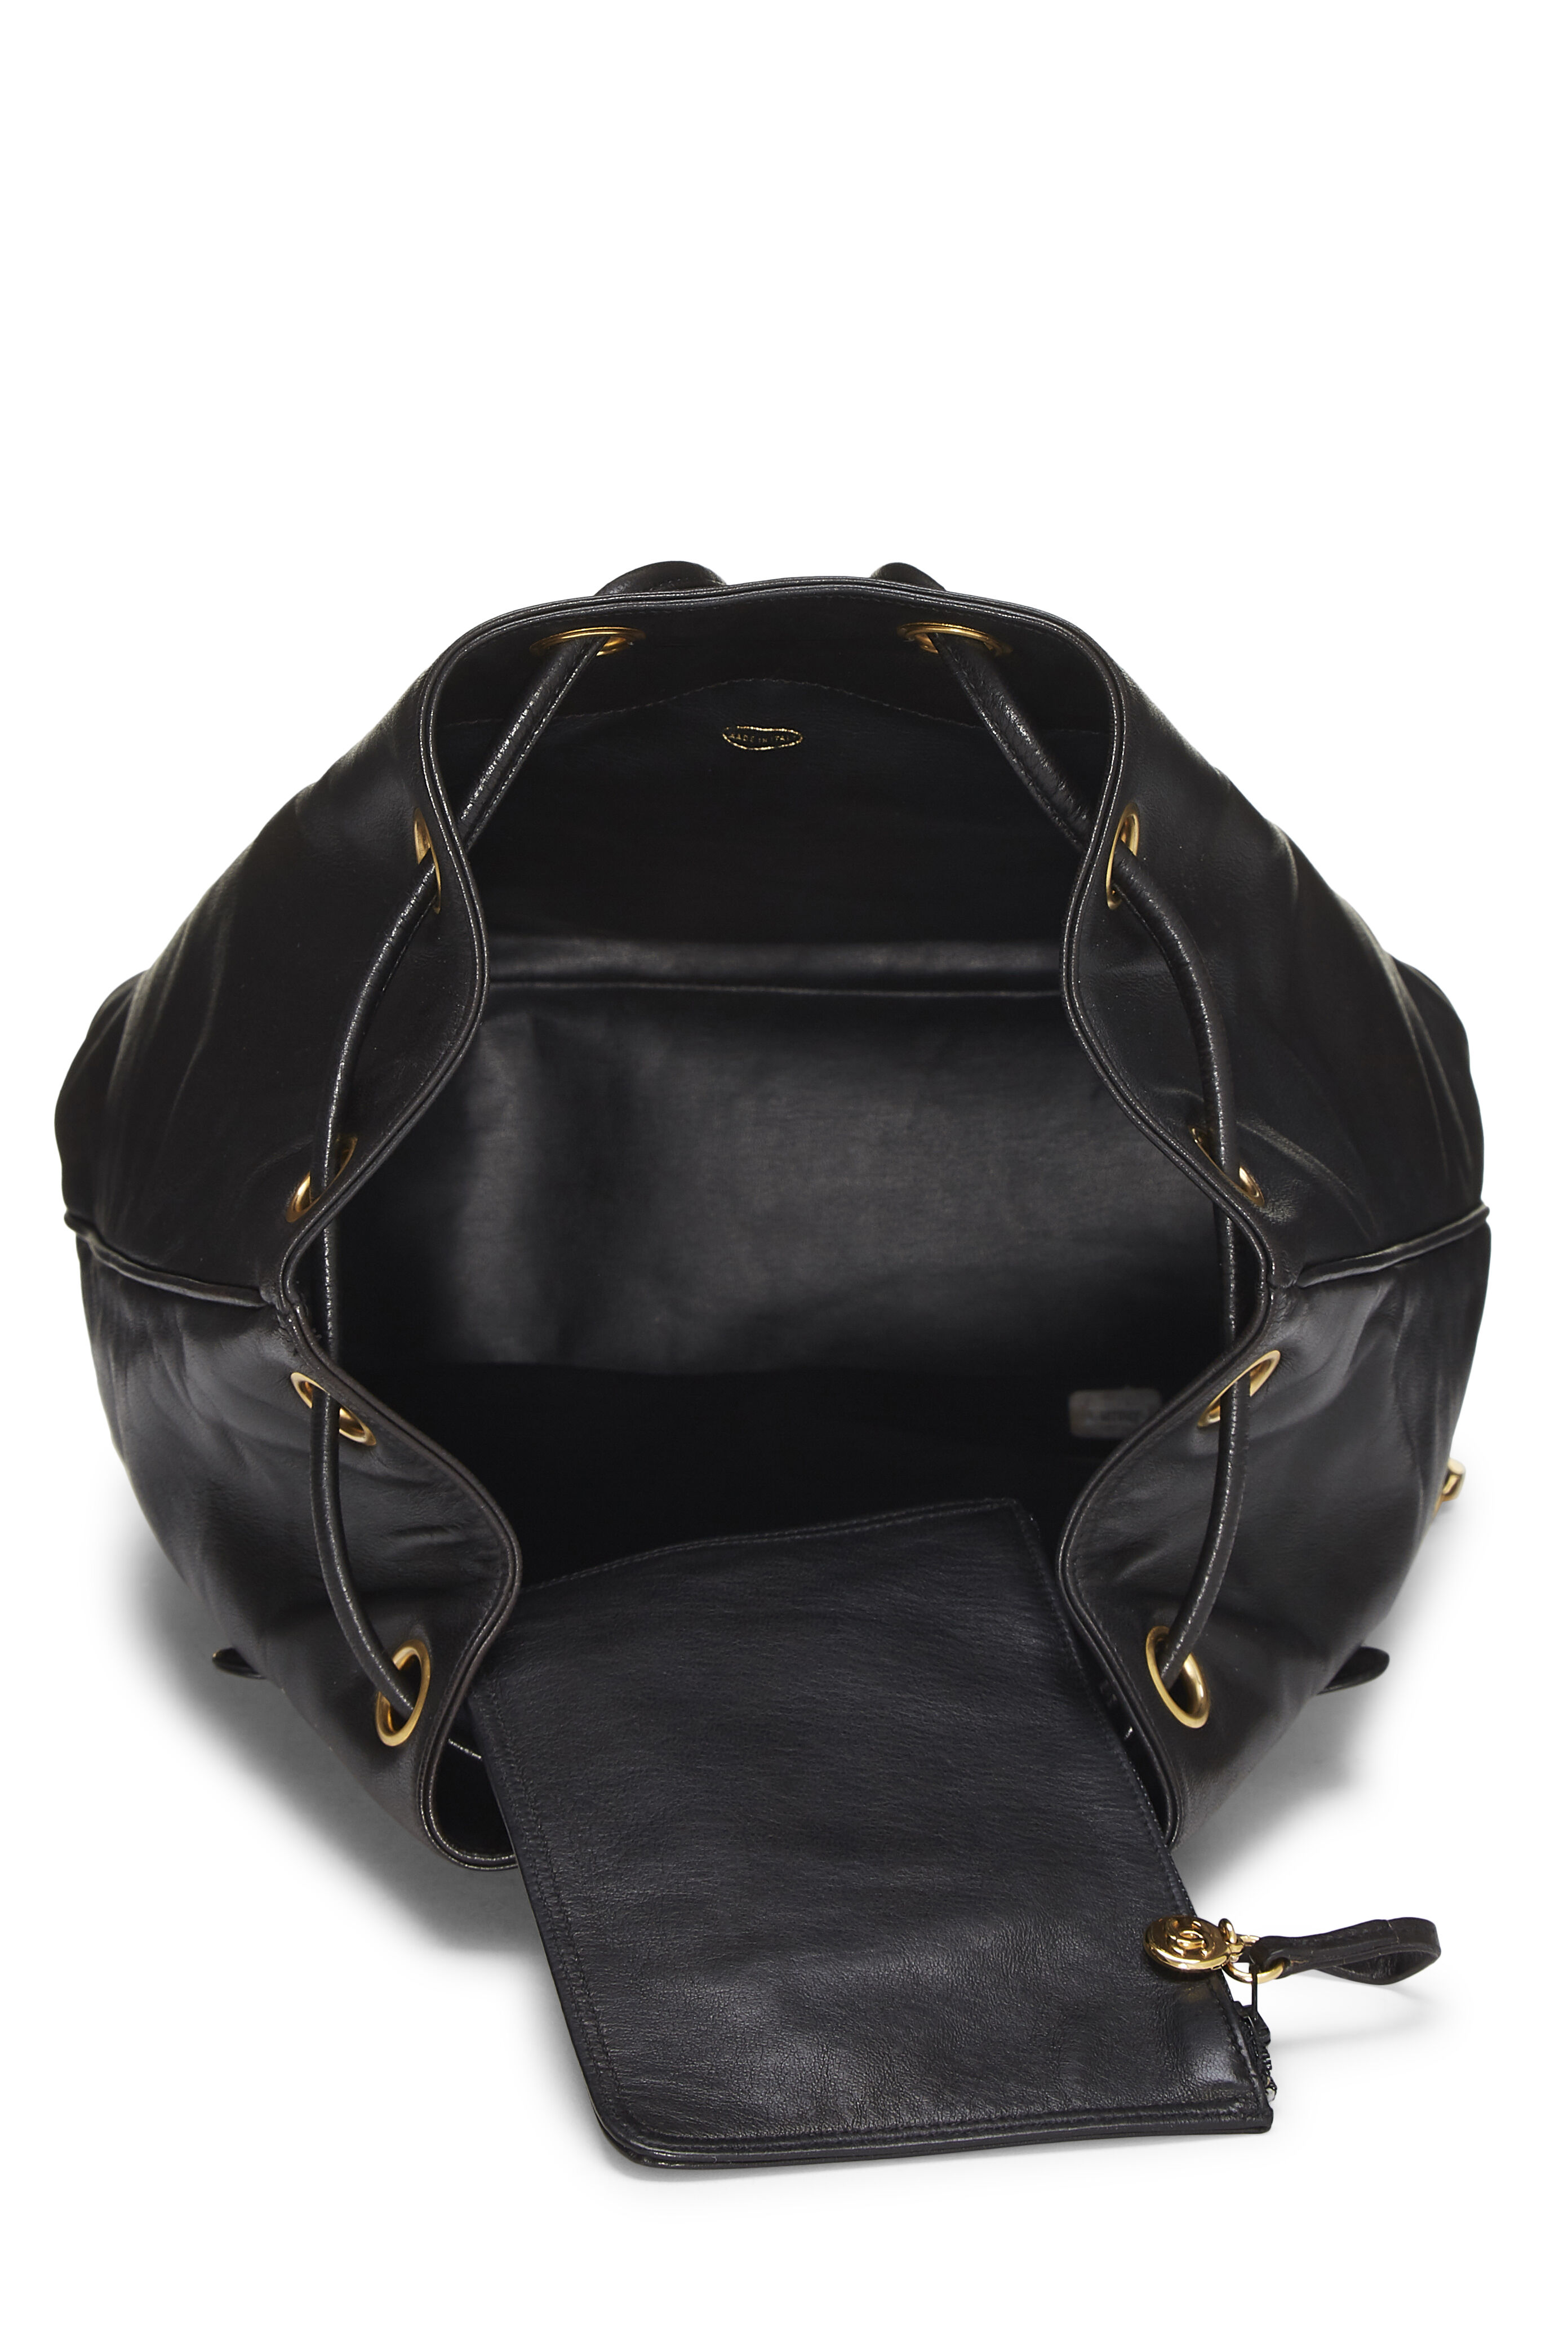 CHANEL Lambskin Bucket Chain Drawstring Bag Black 1214394